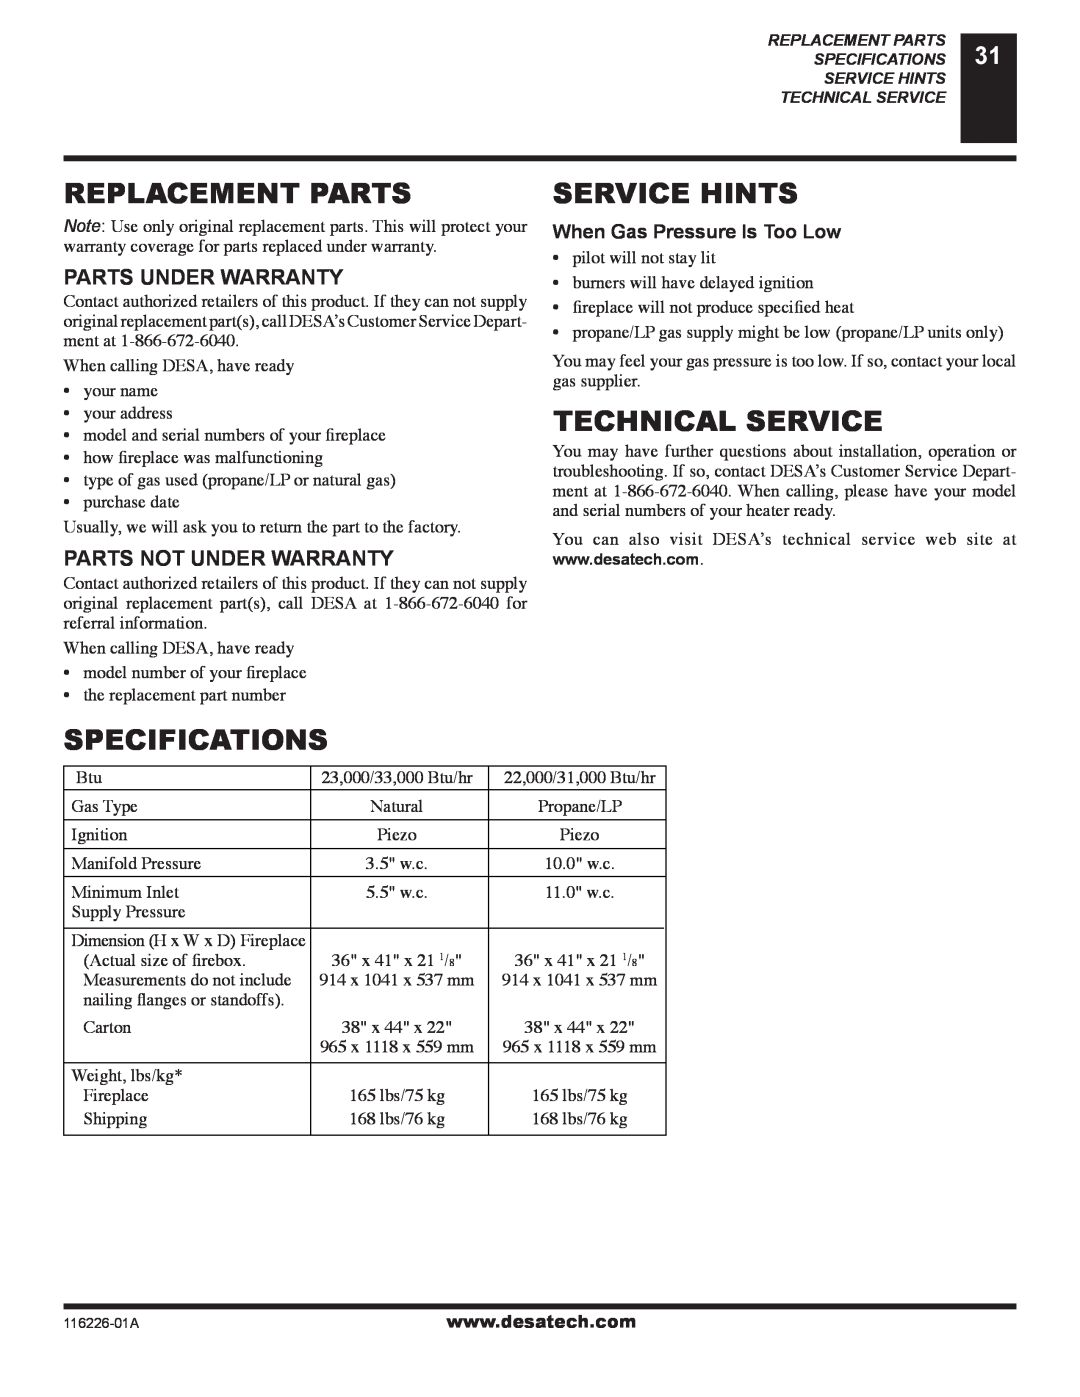 Desa (V)KC36P, (V)KC36N Replacement Parts, Service Hints, Technical Service, Specifications, Parts Under Warranty 